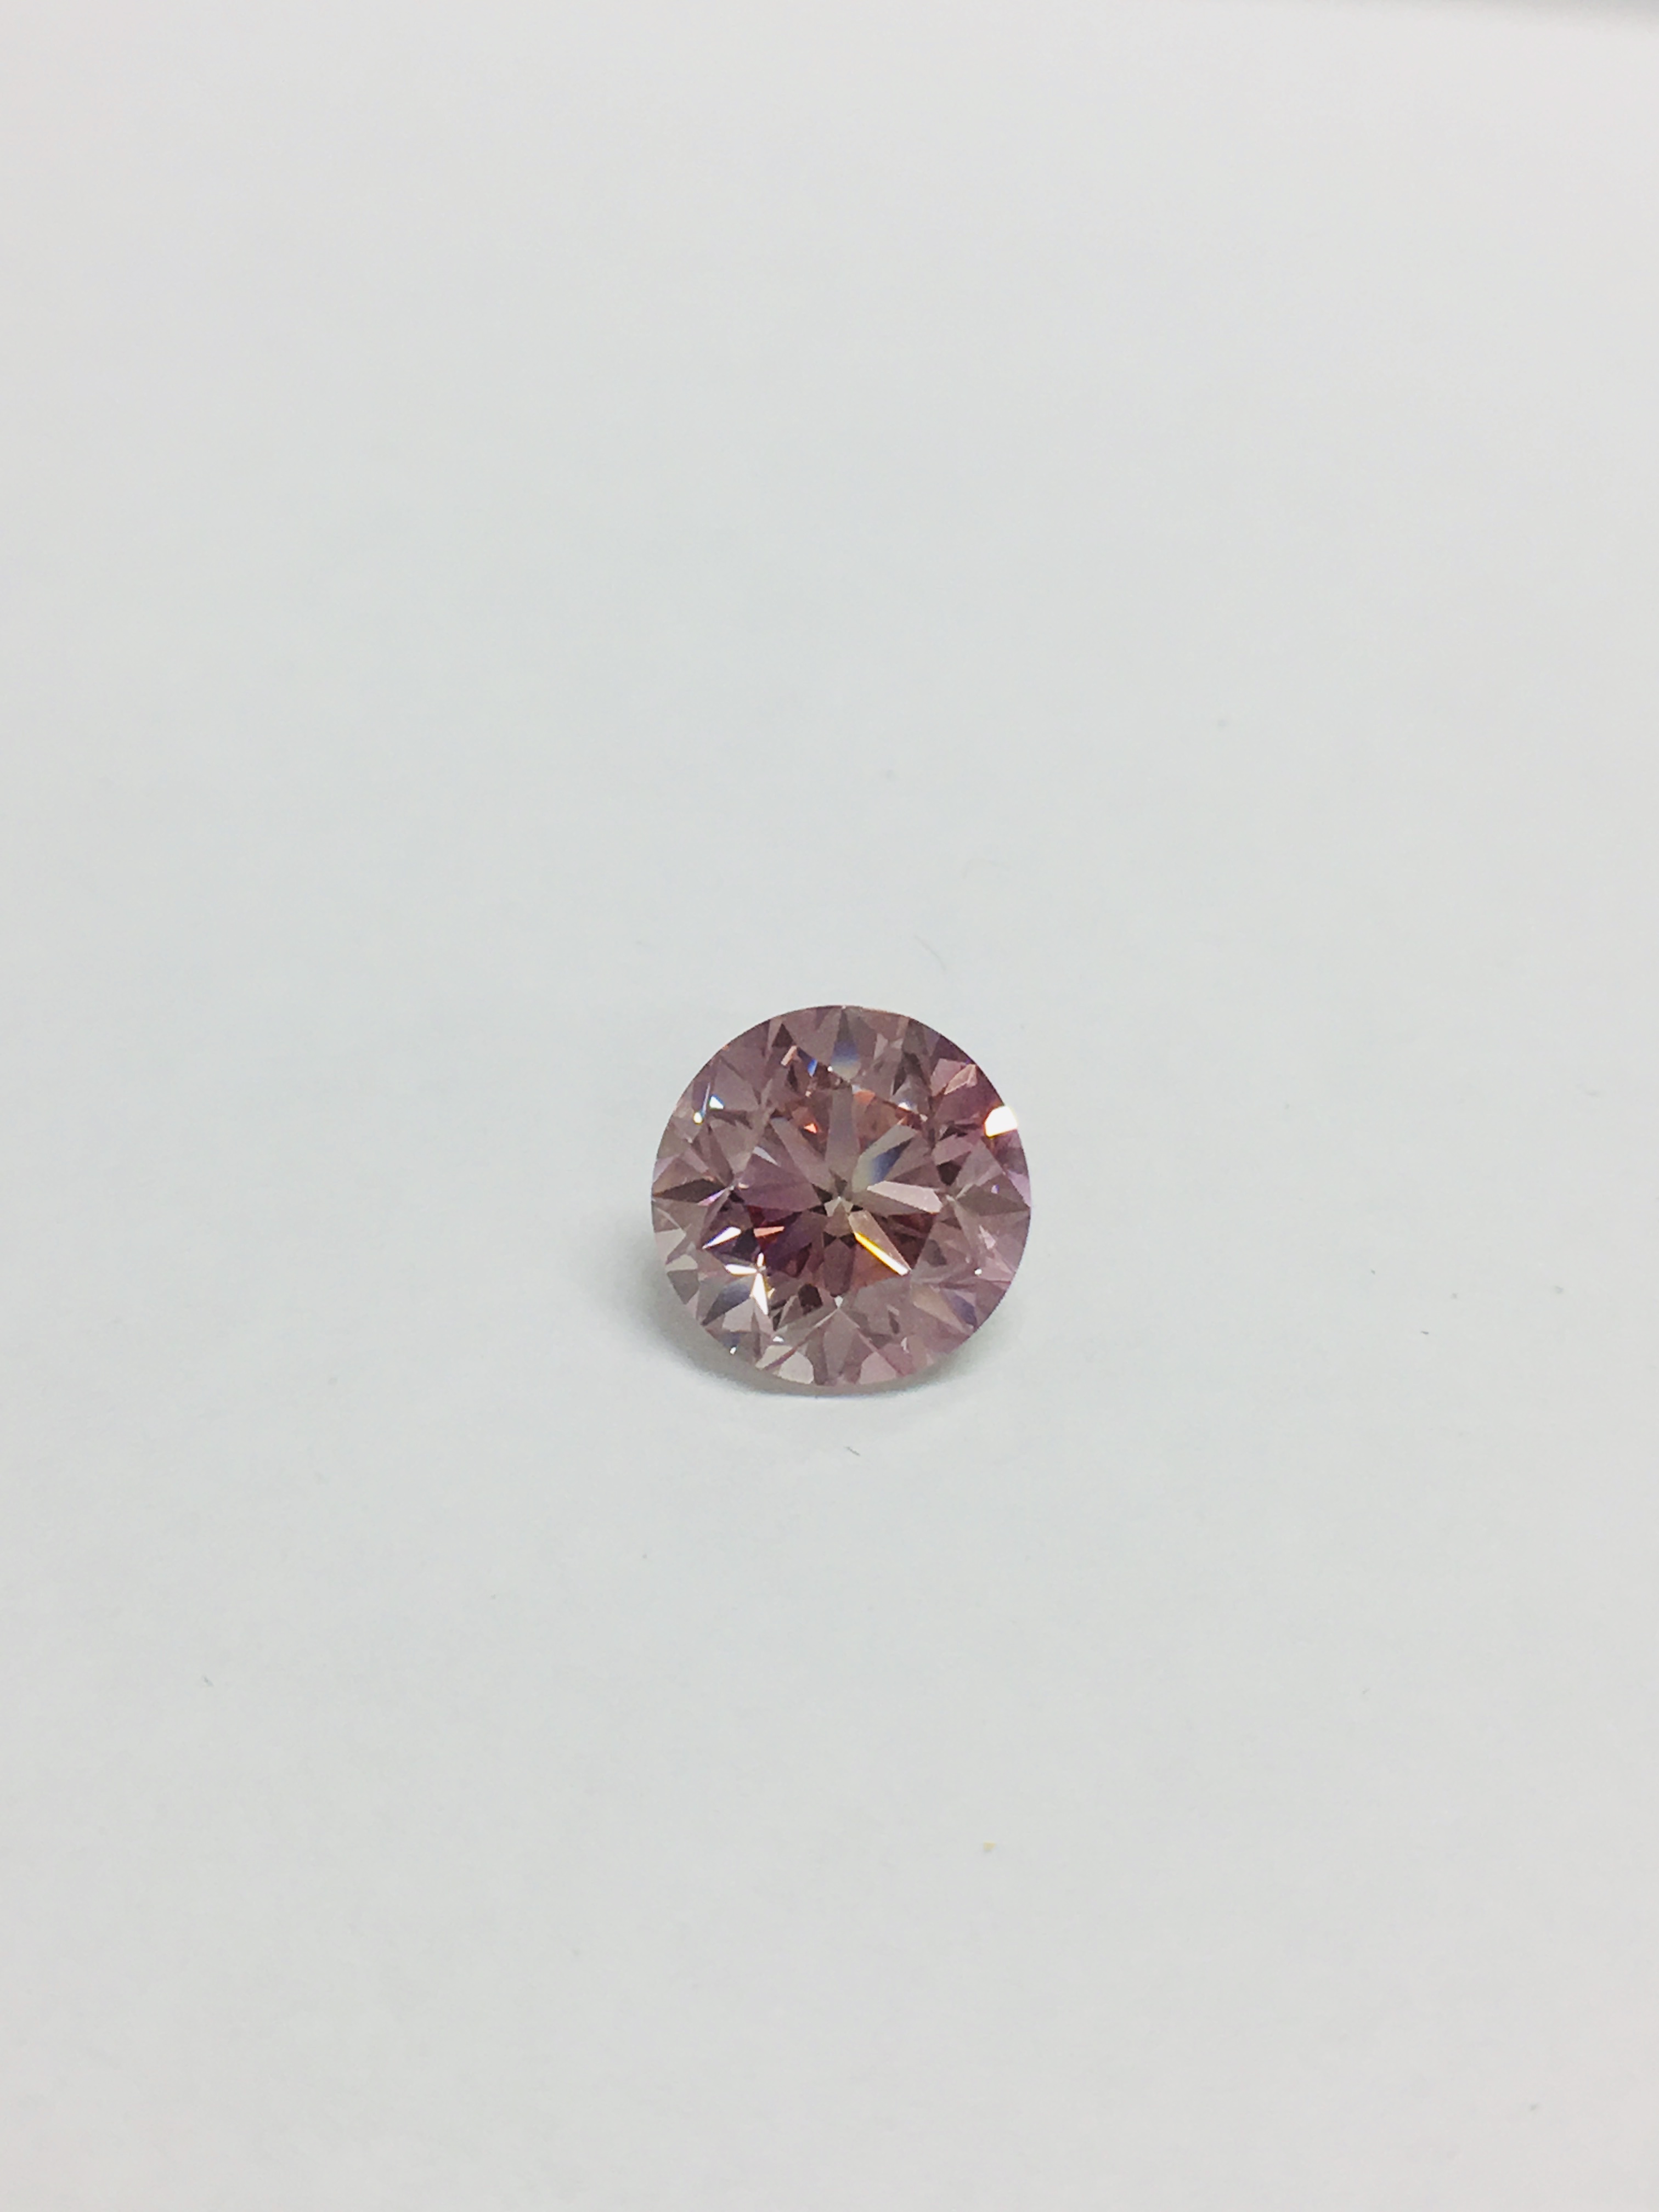 2.04ct Pink Brilliant cut Natural Diamond,GIA certification 6173645004